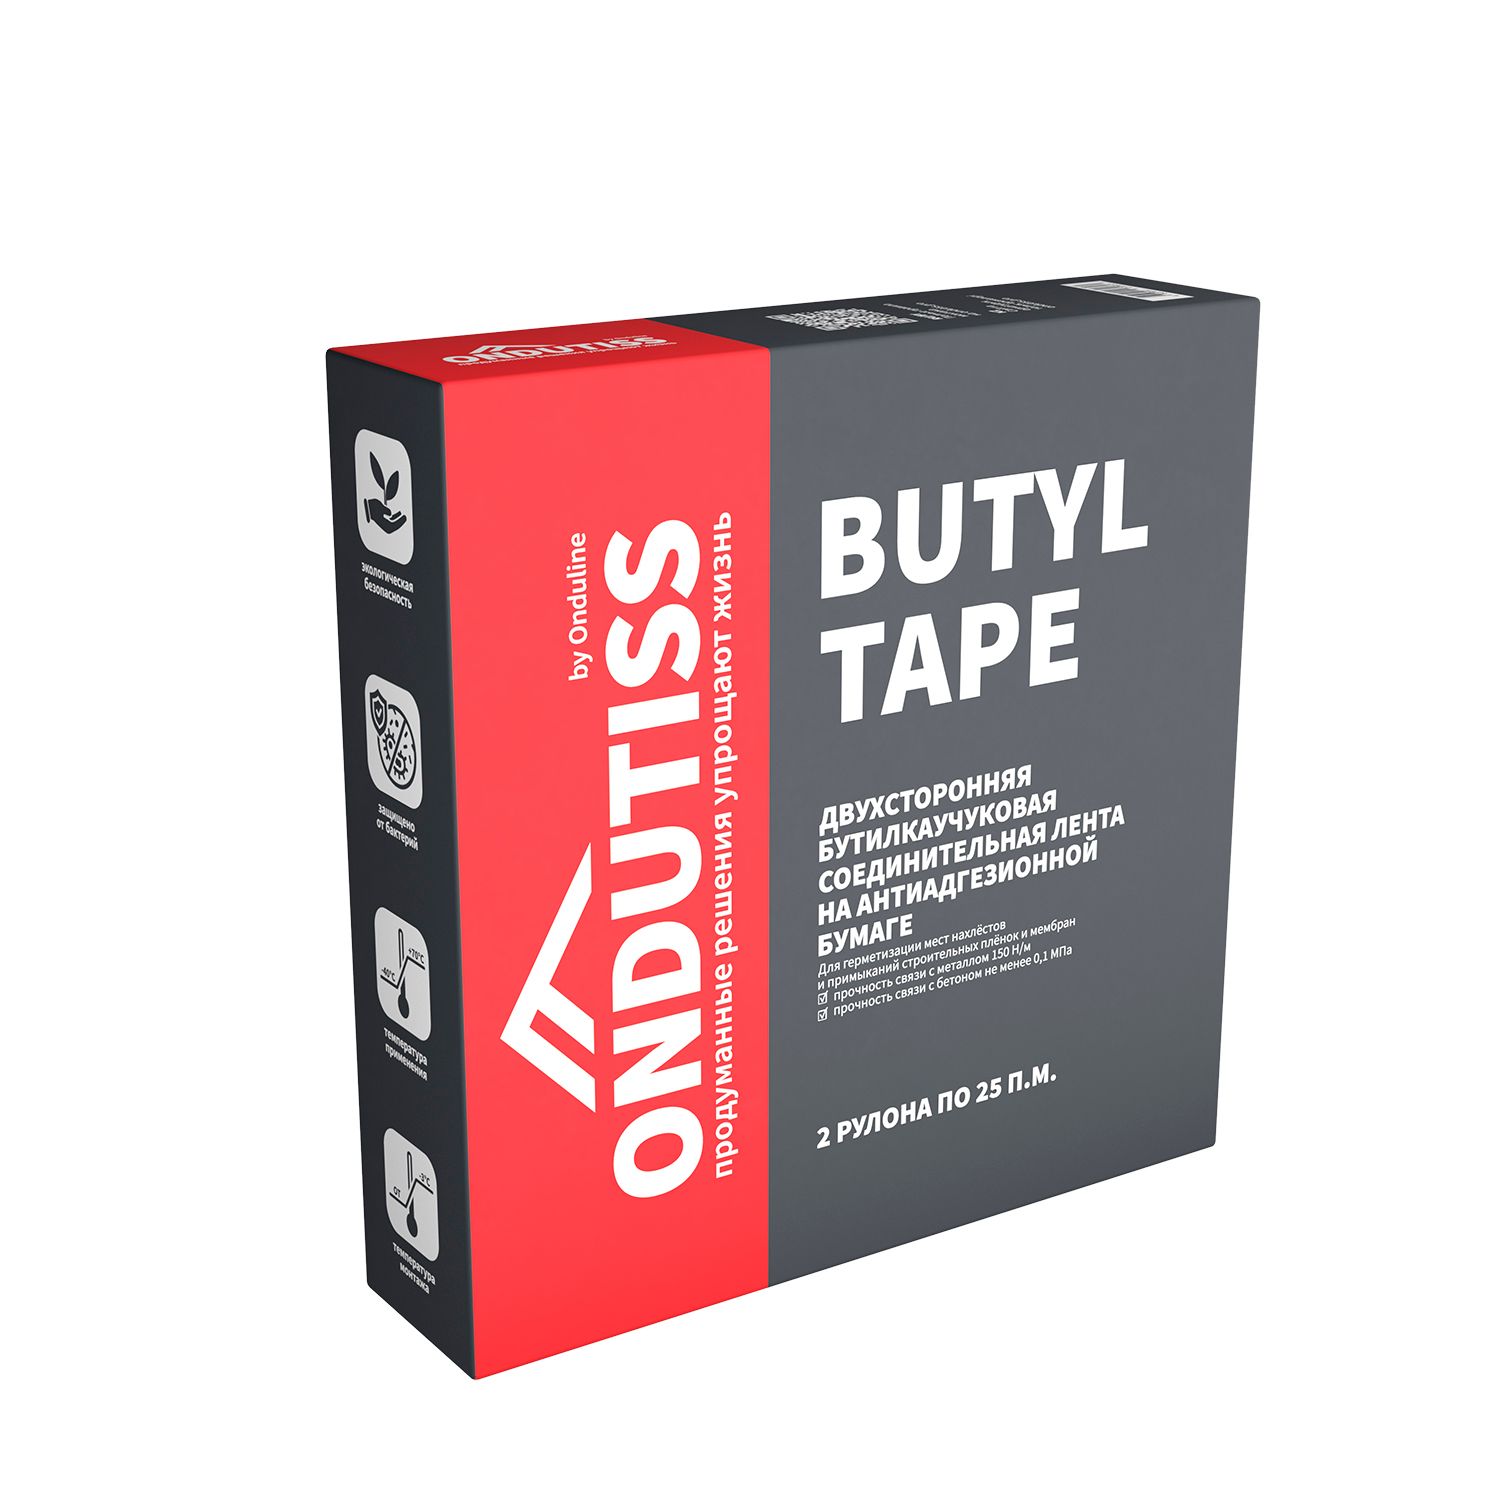 ONDUTISS Butyl Tape